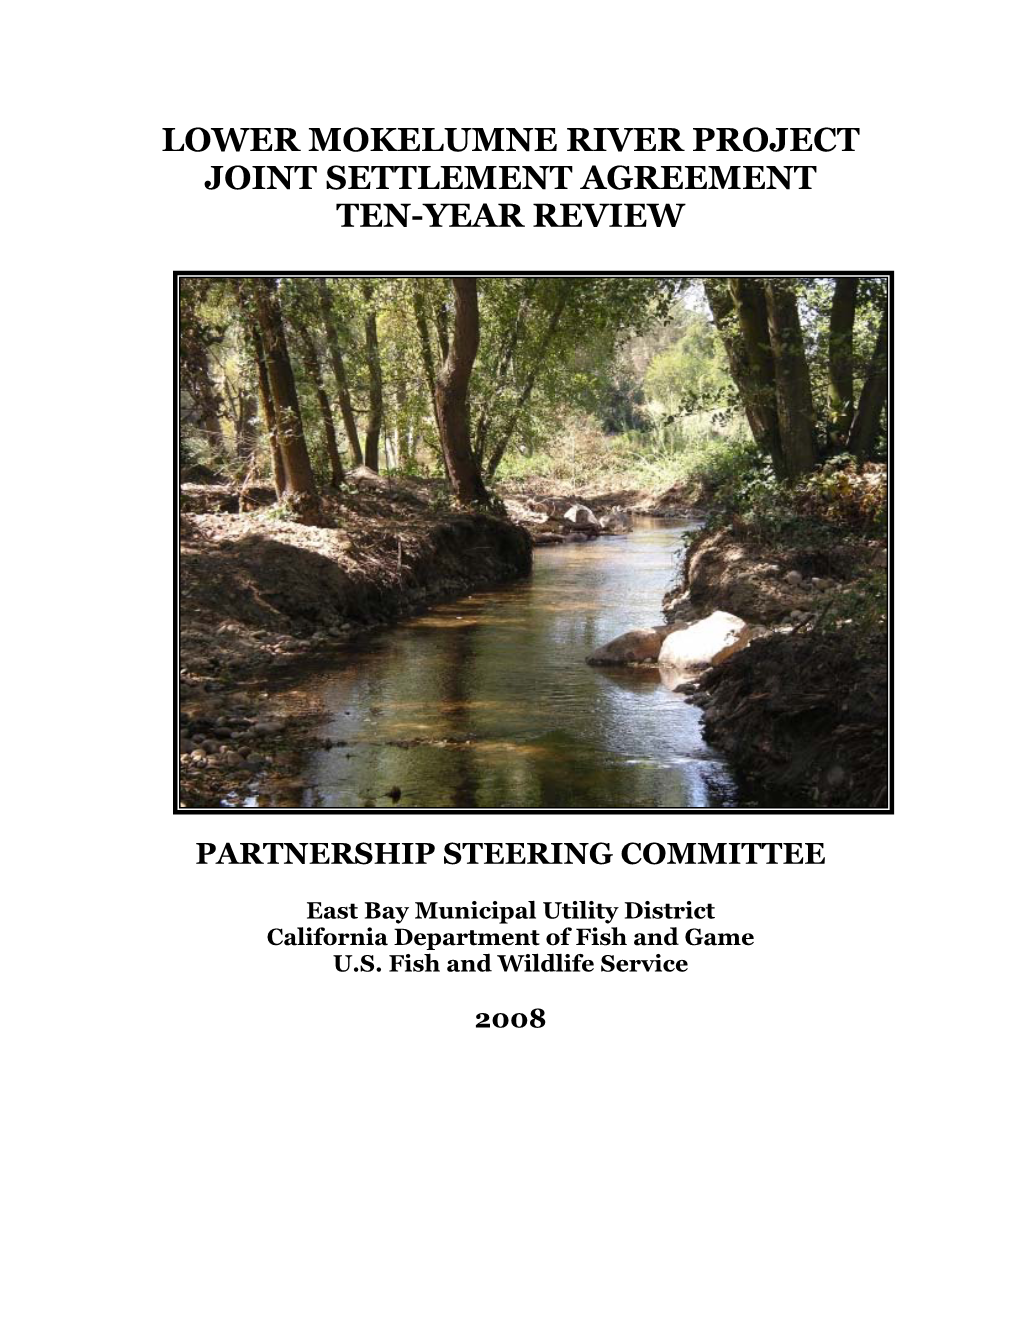 Lower Mokelumne River Project Joint Settlement Agreement Ten-Year Review